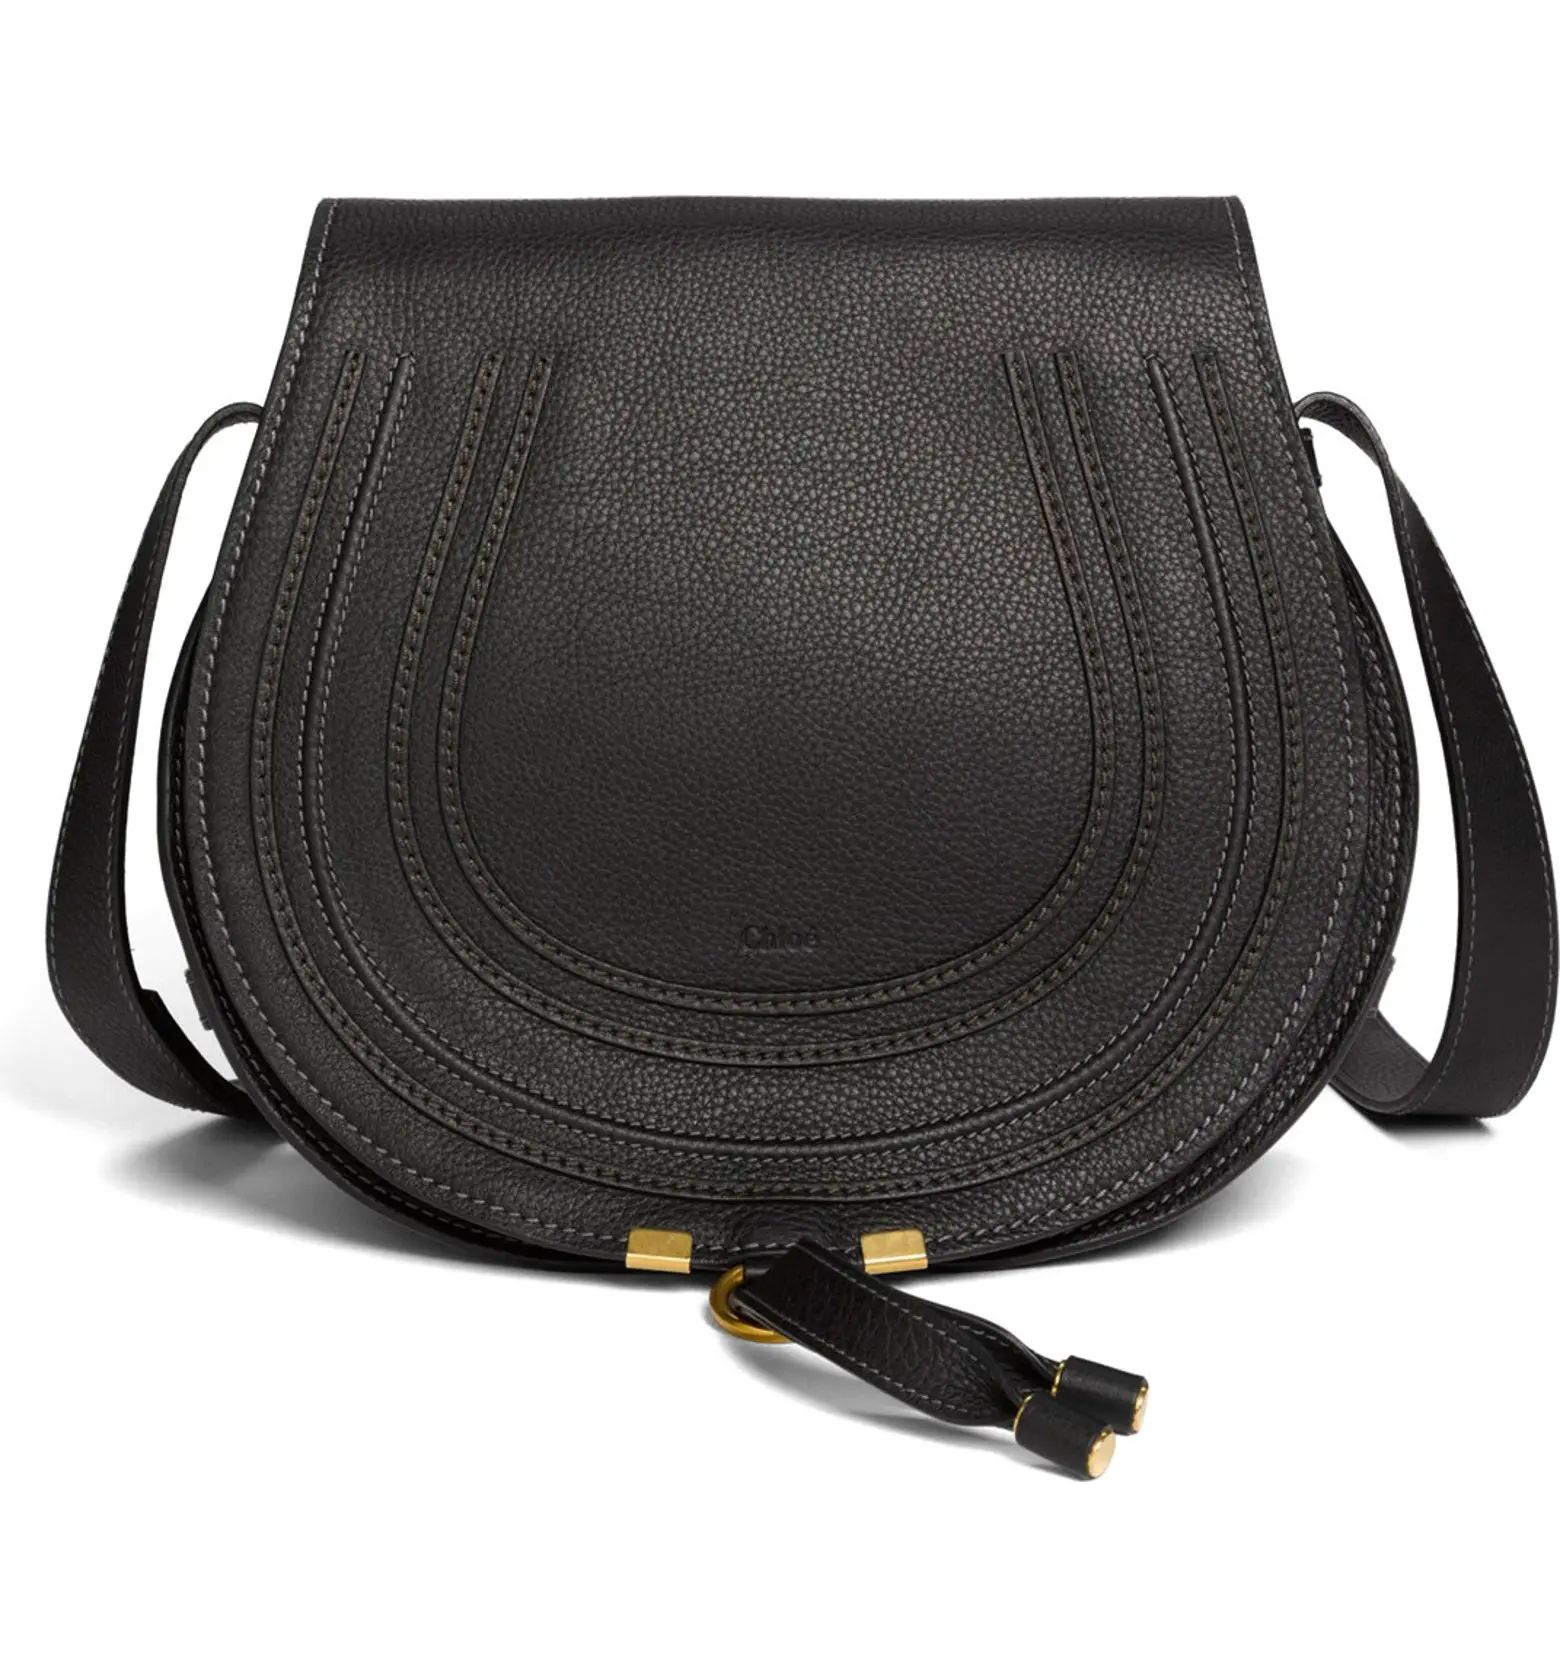 Chloé Medium Marcie Leather Crossbody Bag | Nordstrom | Nordstrom